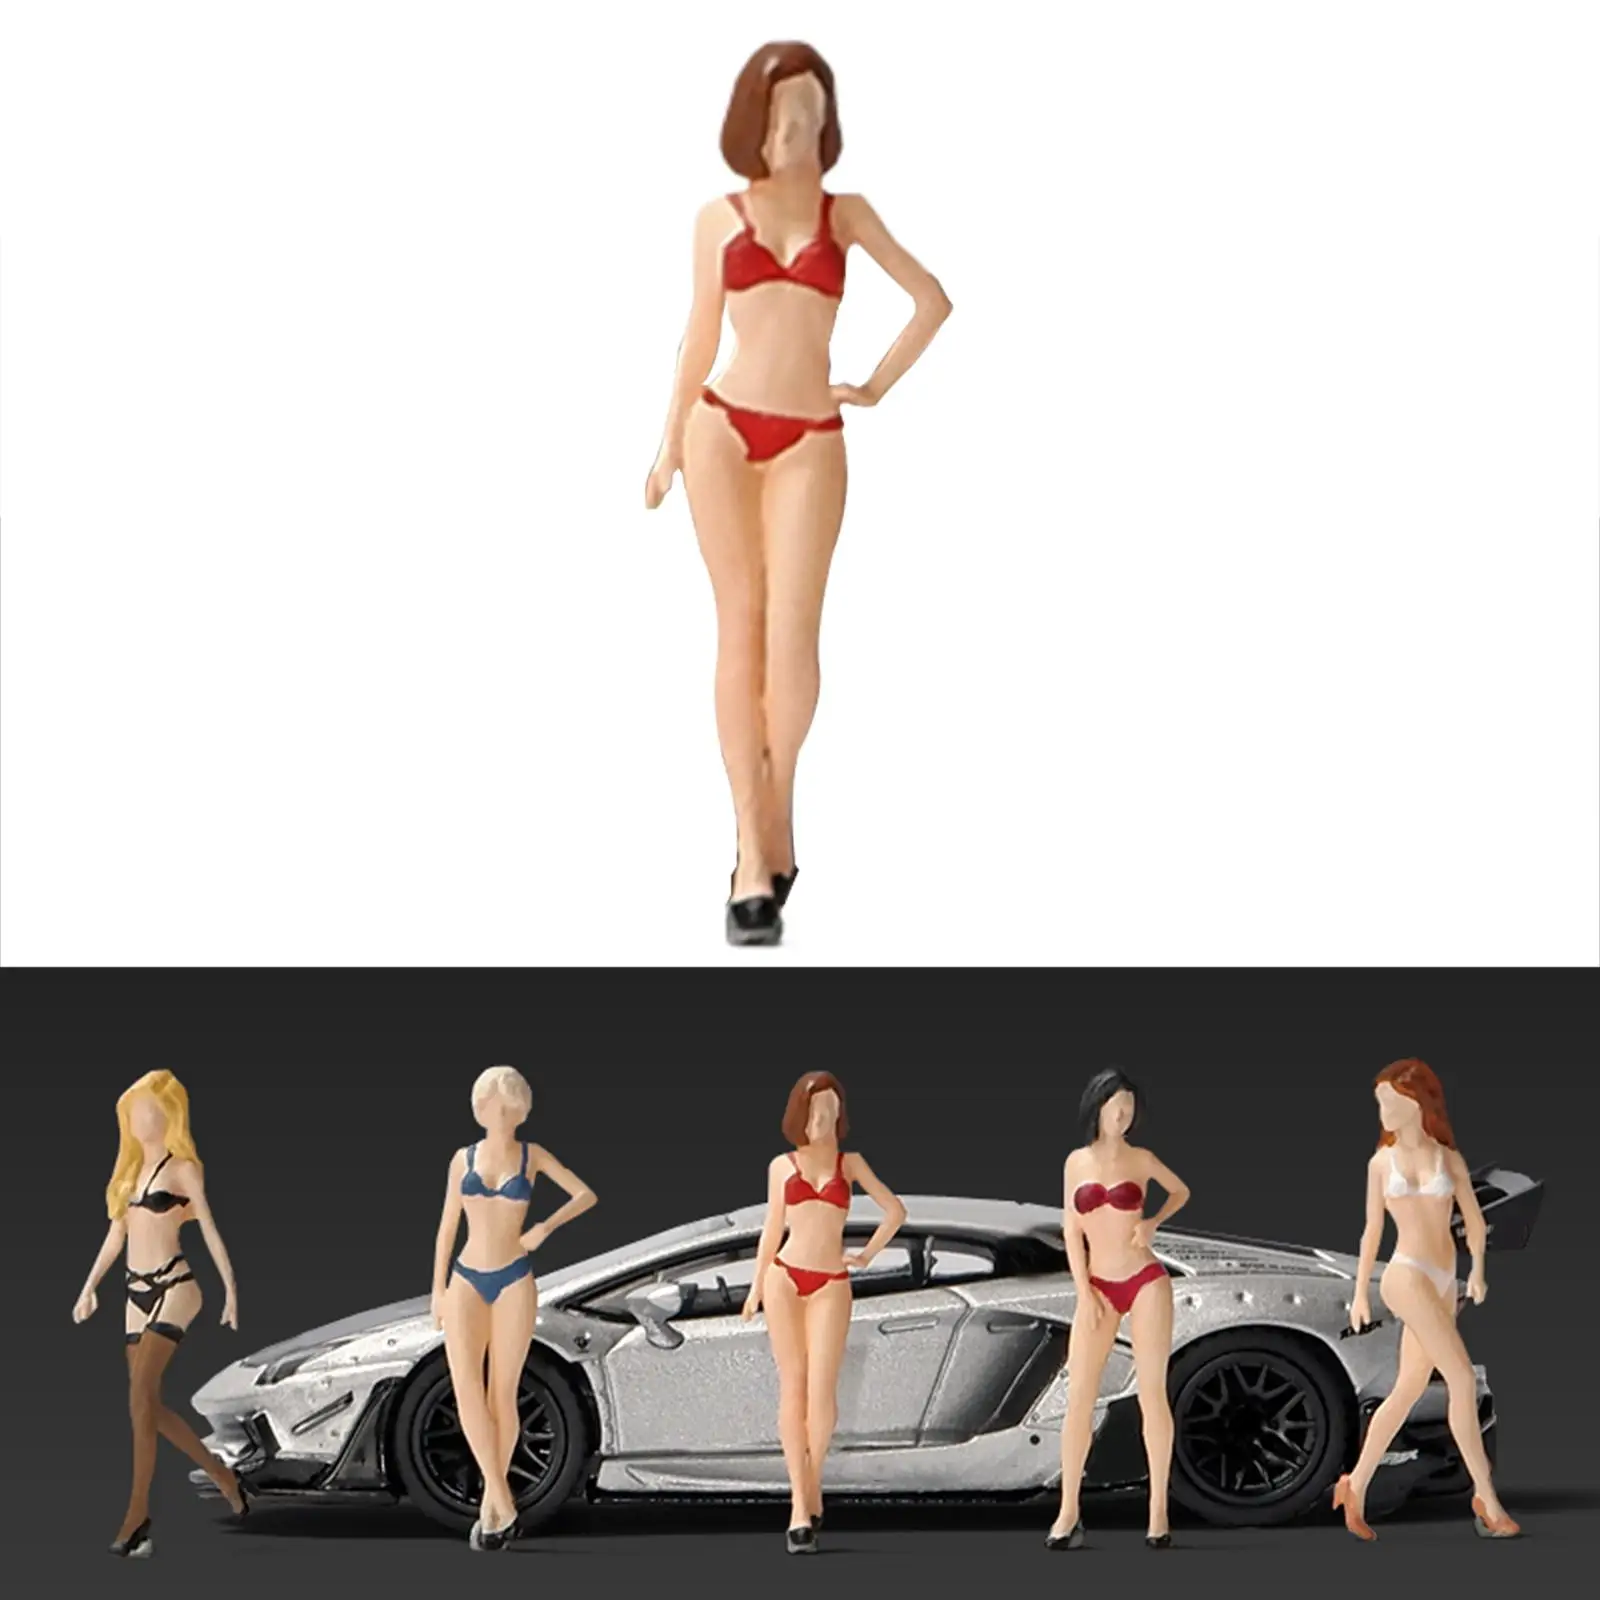 1/64 Scale Model People Figures Miniature People Model for DIY Scene Layout